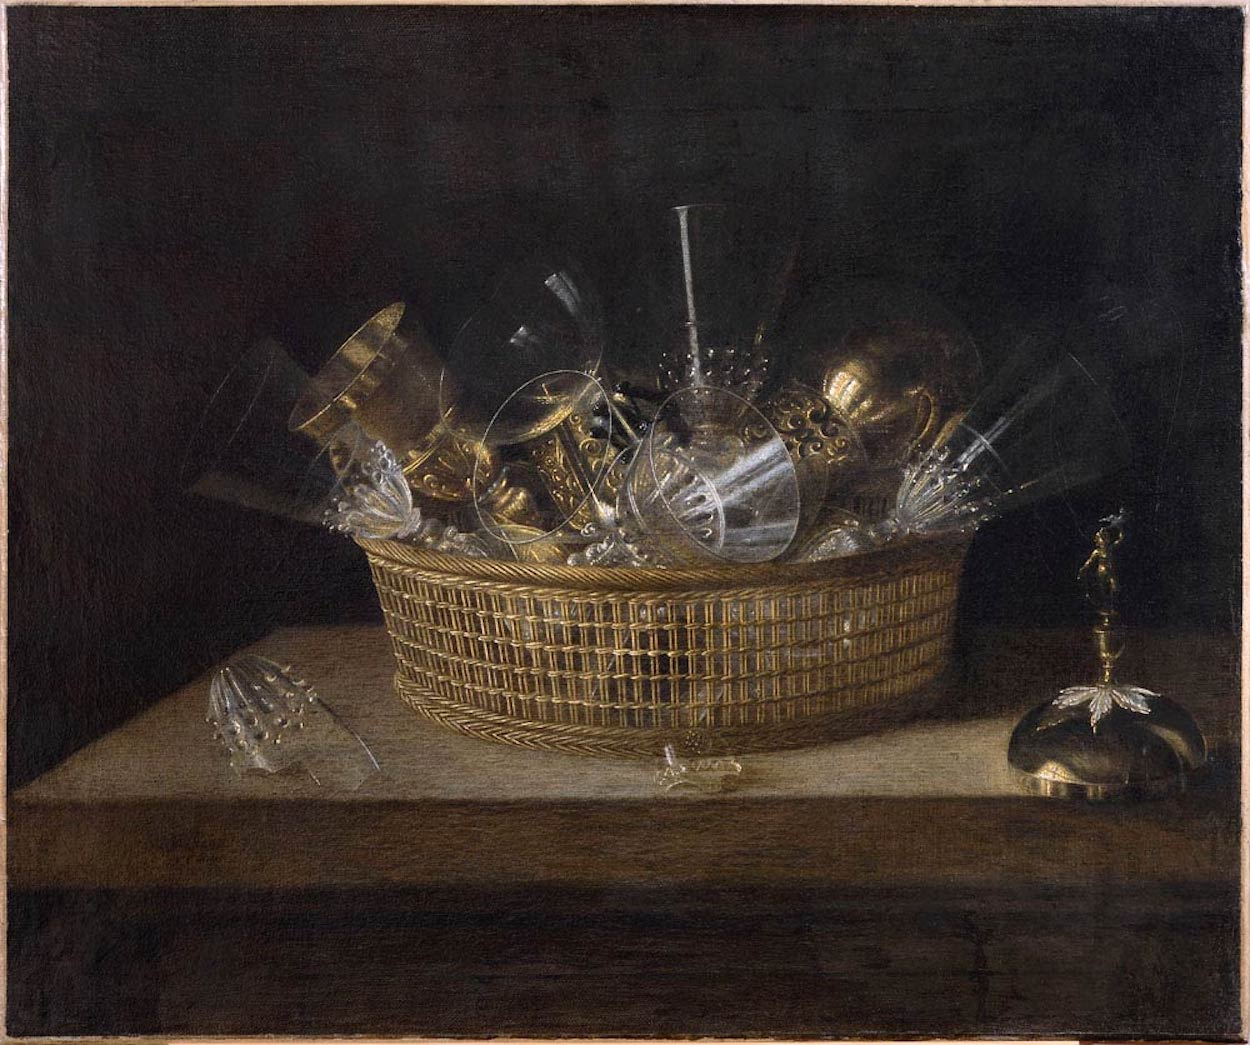 Cesto con bicchieri by Sébastien Stoskopff - 1644 - 52 x 63 cm 